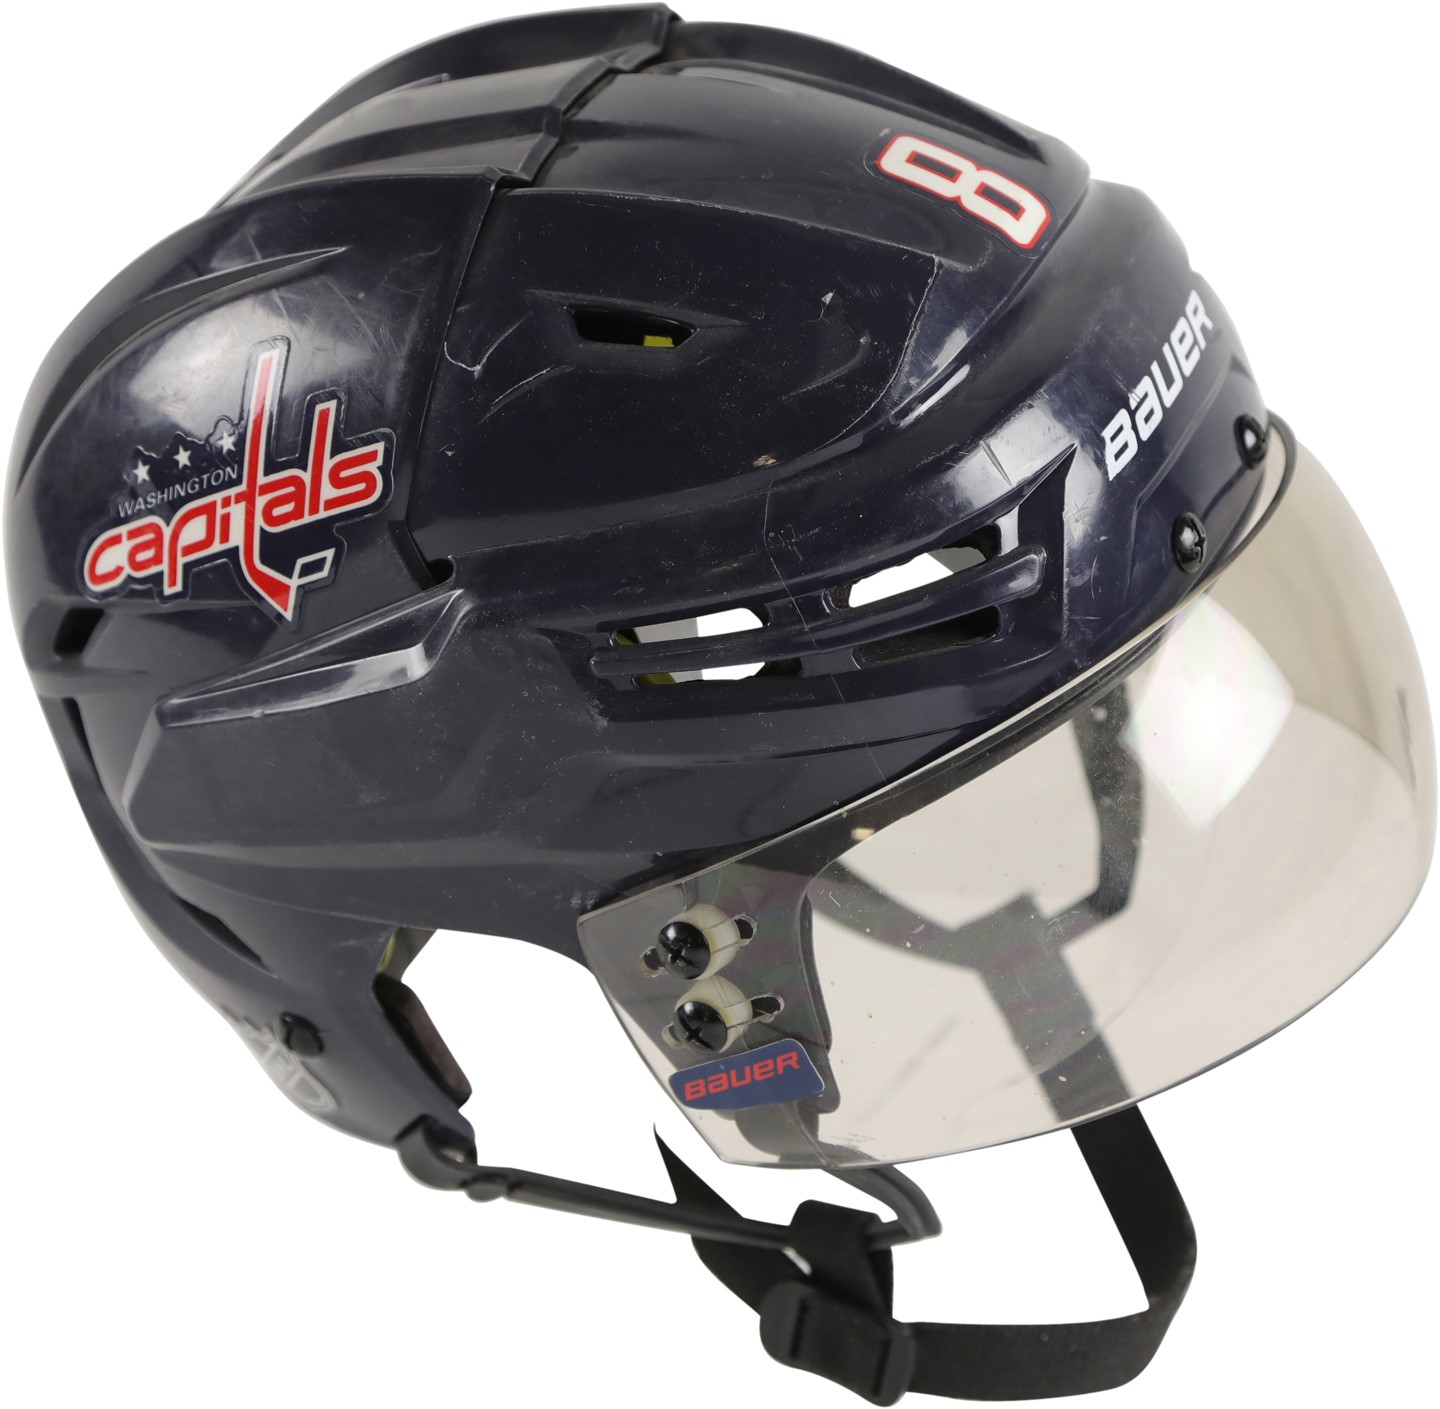 Hockey - 5/4/15 Alex Ovechkin Washington Capitals Game Worn Helmet (Photo-Matched & MeiGray)